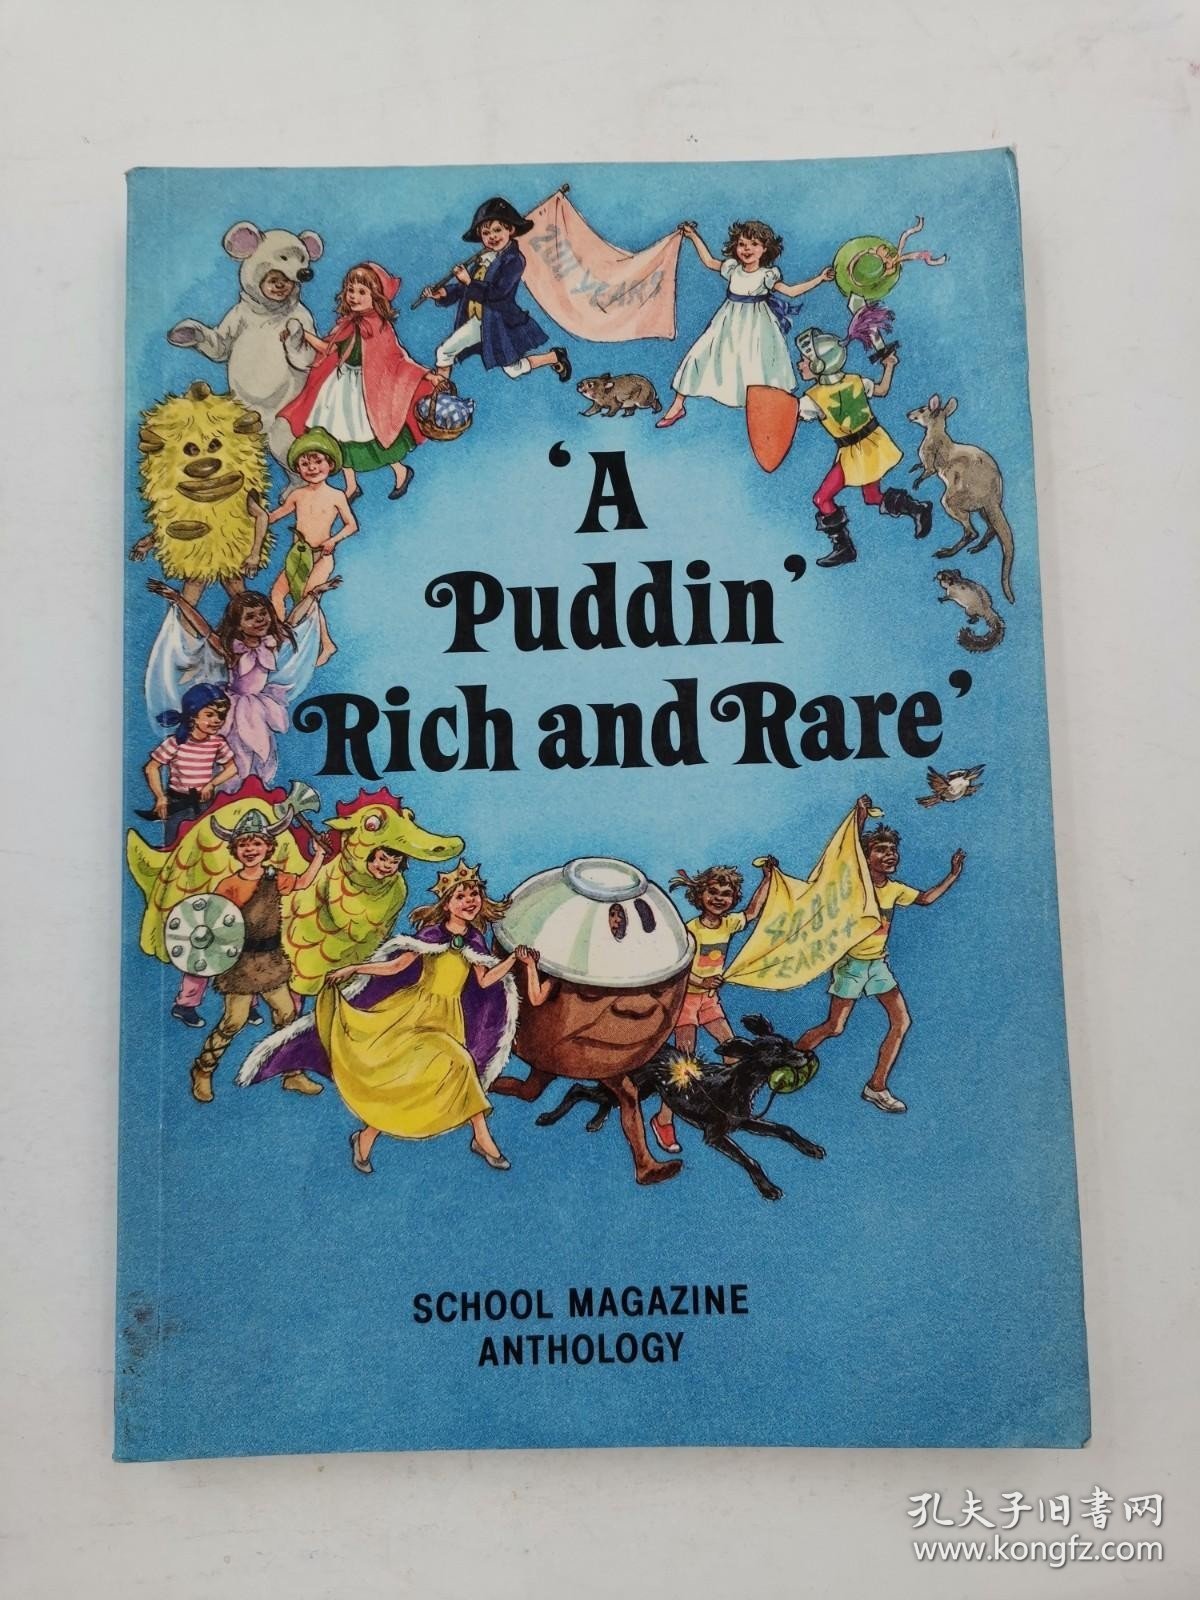 A puddin' rich and rare: School magazine anthology